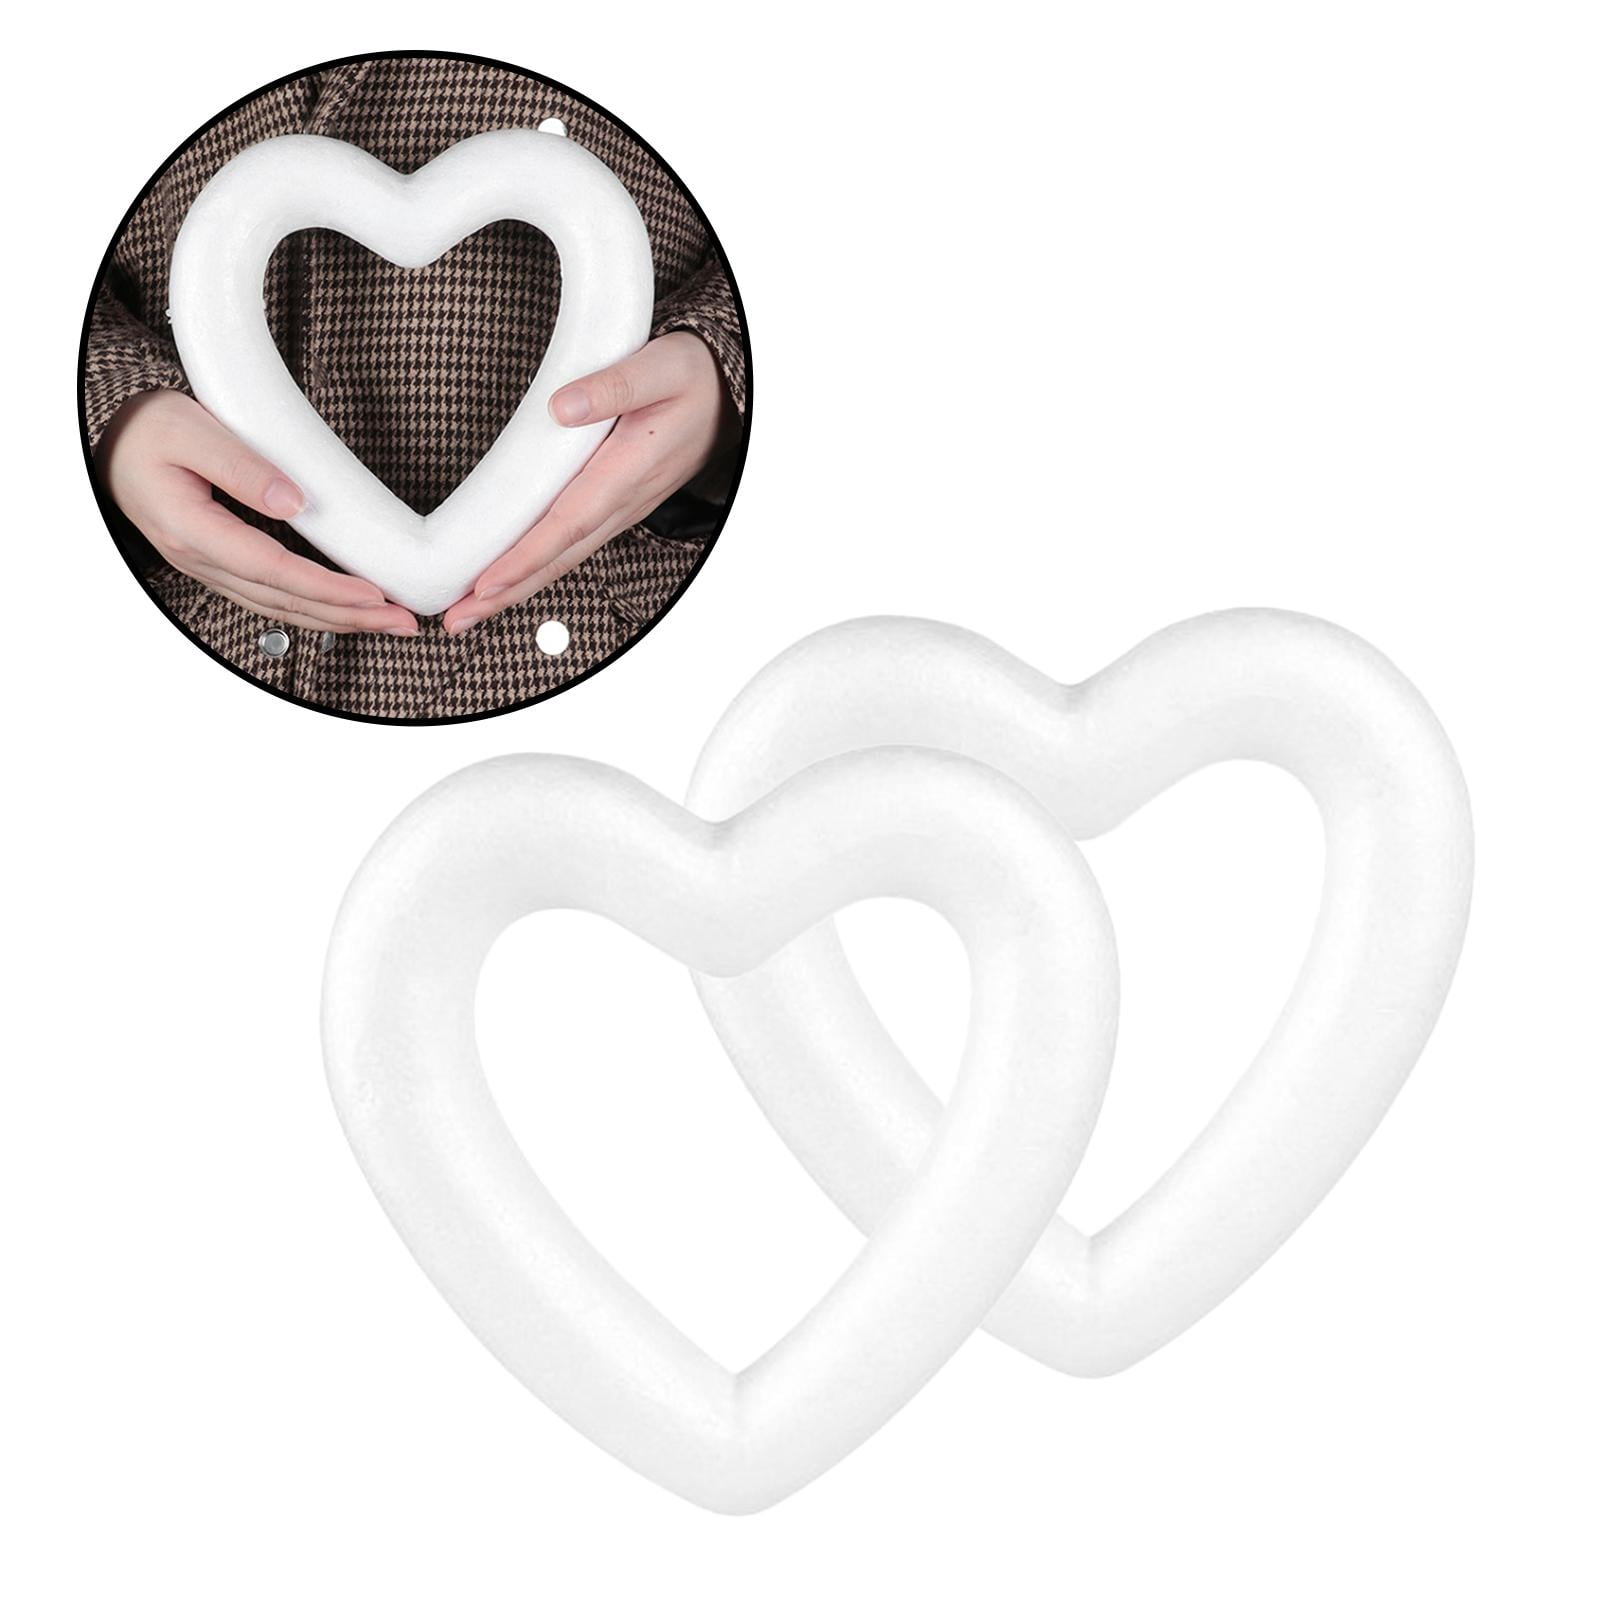 Cabilock 12pcs Craft Foam Hearts Ball Heart Shaped Polystyrene